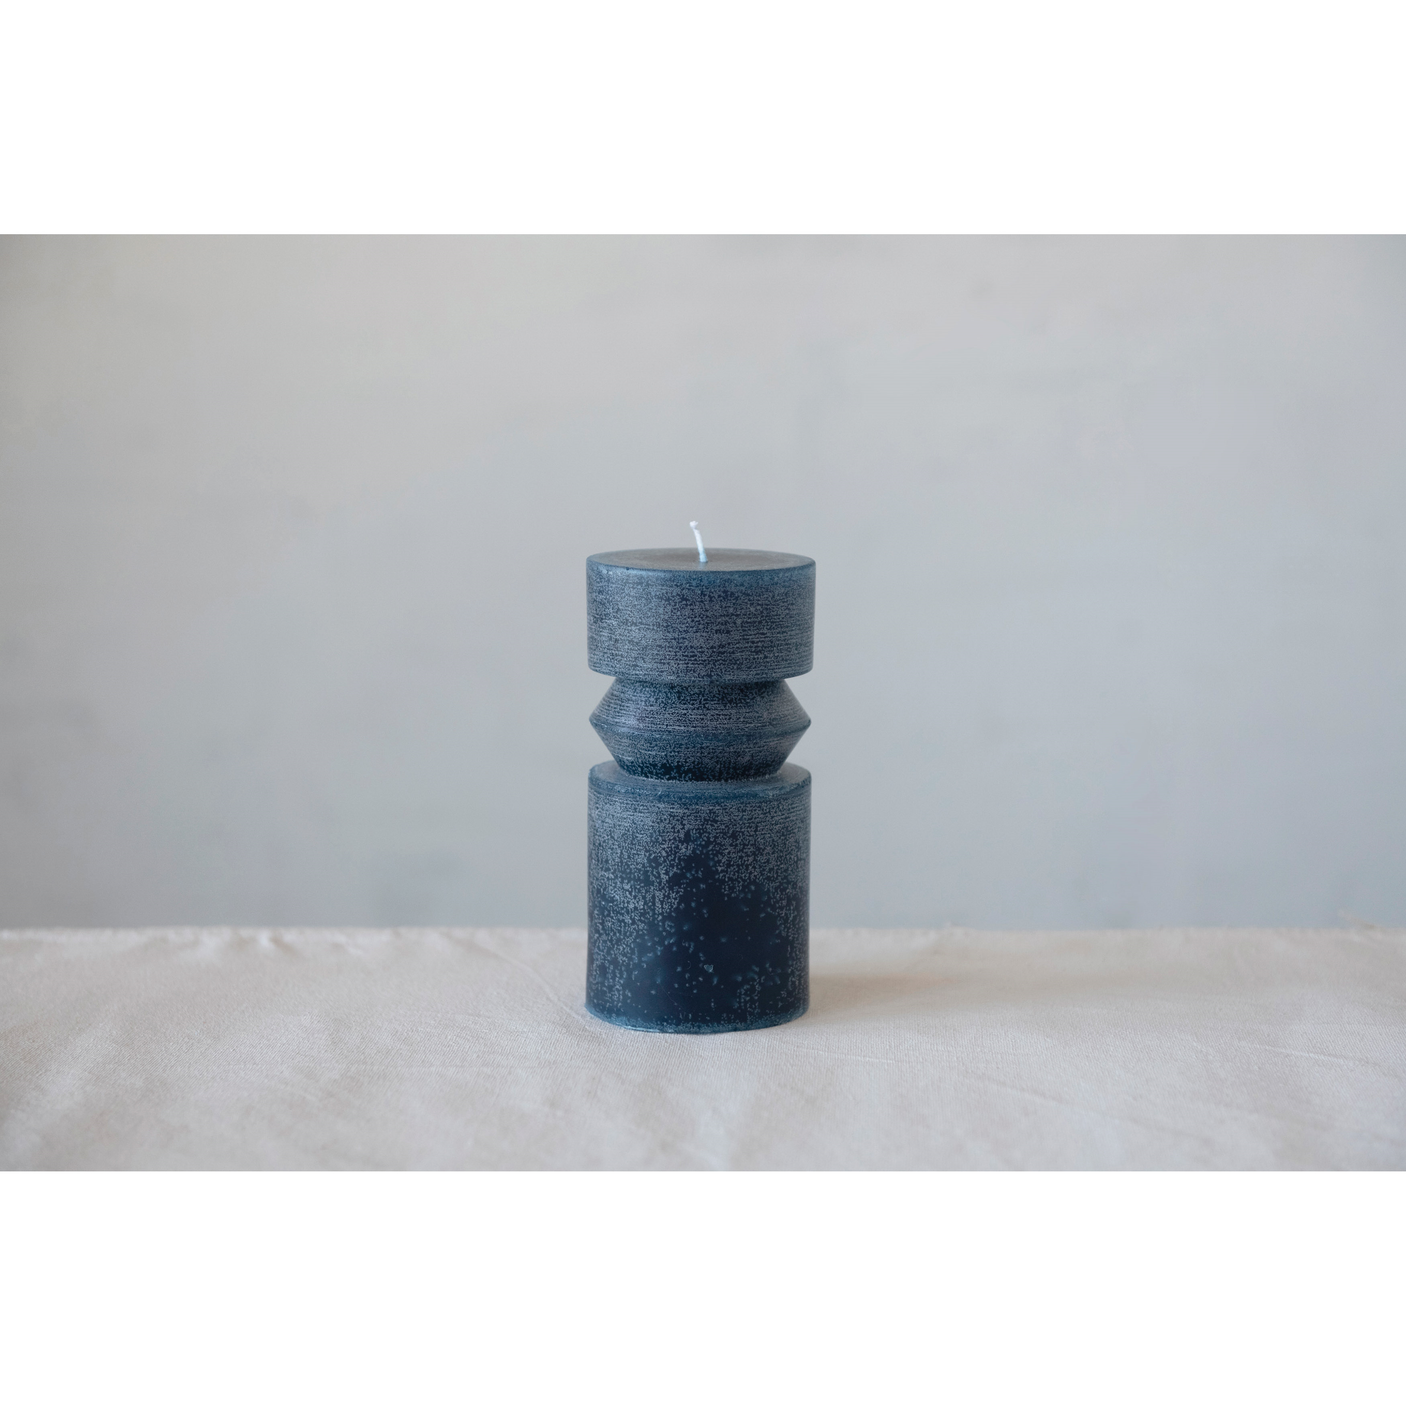 Unscented Harmony Totem Pillar Candle - Marine Blue